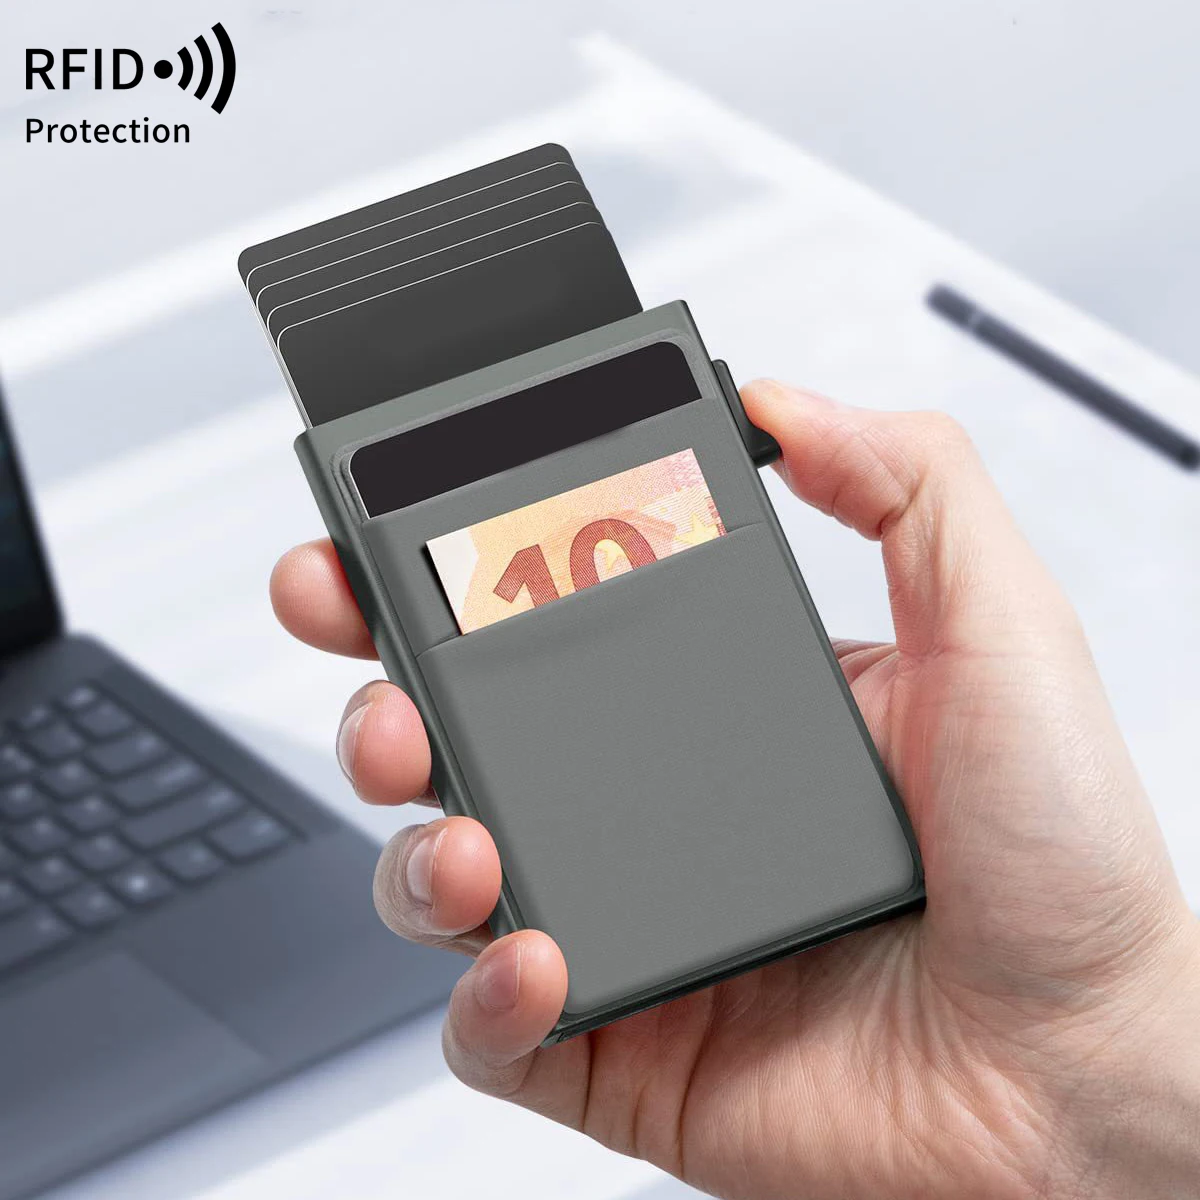 

Ultra Thin Metal Wallet/RFID Blocking Credit Card Holder/Slim pop up metal wallet for Travel and Work